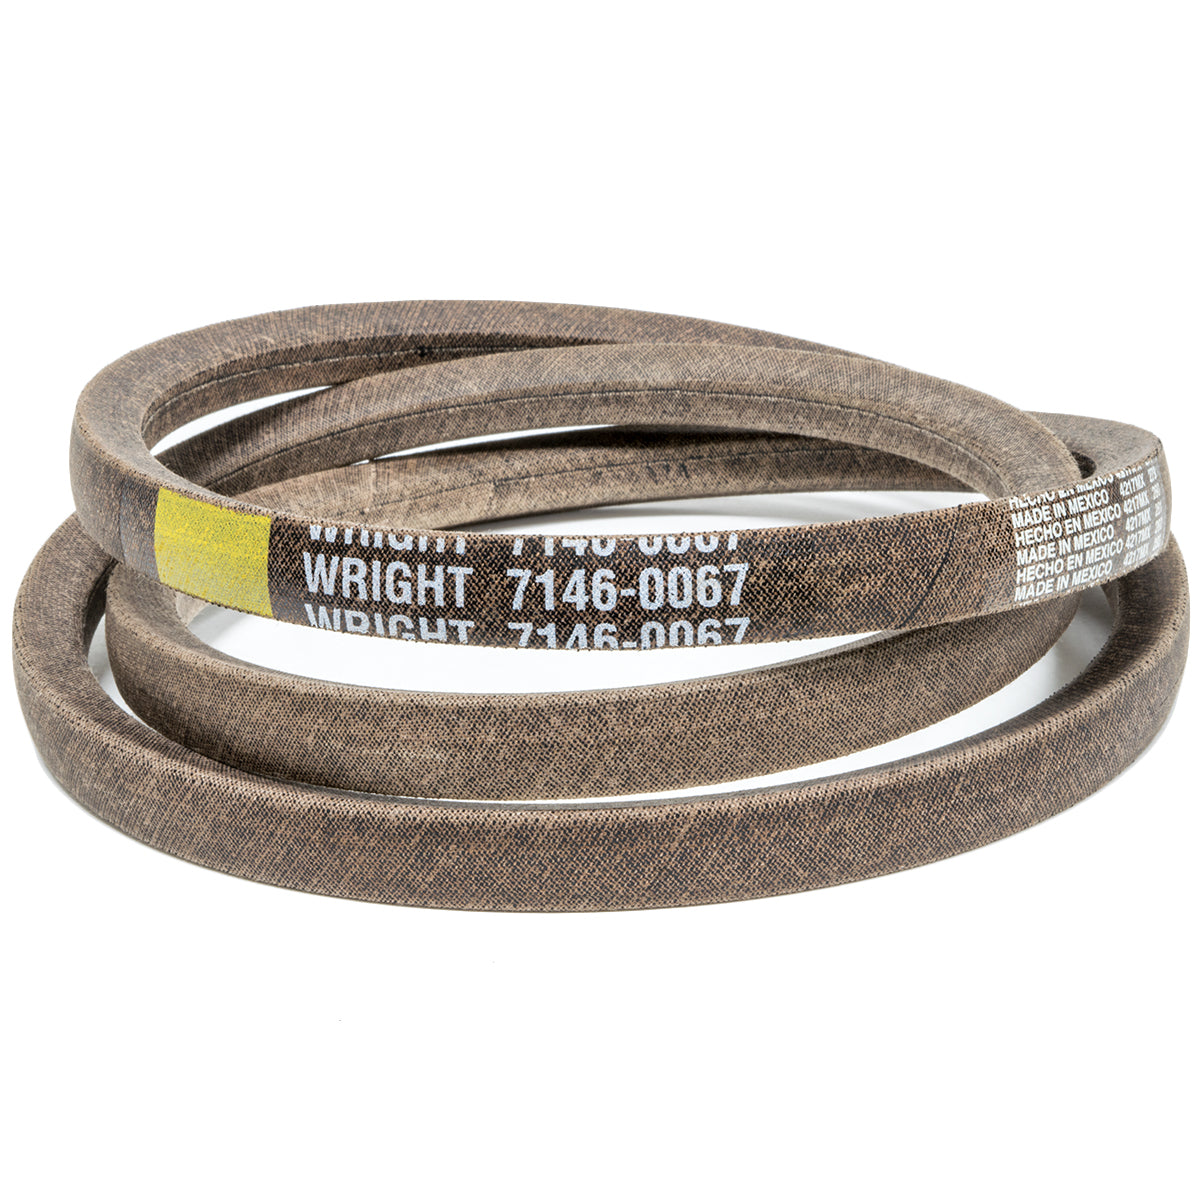 Wright 71460067 Cinturón de cubierta